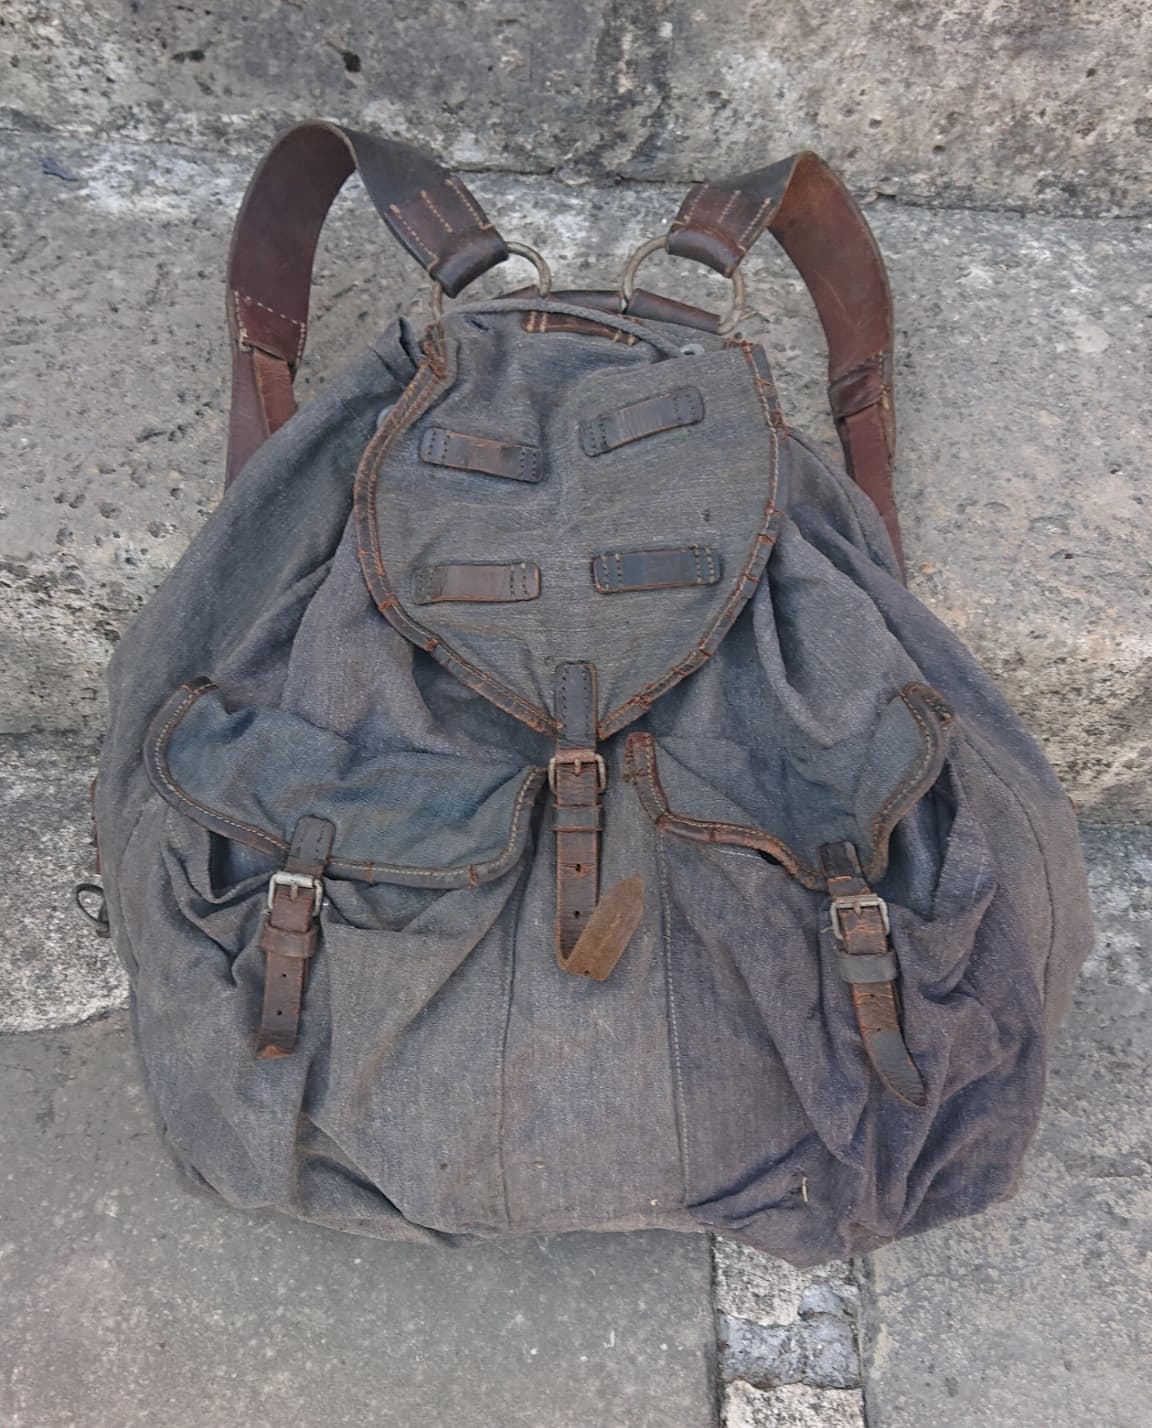 militaria : Sac à dos luftwaffe 1942 / luftwaffe backpack ww2